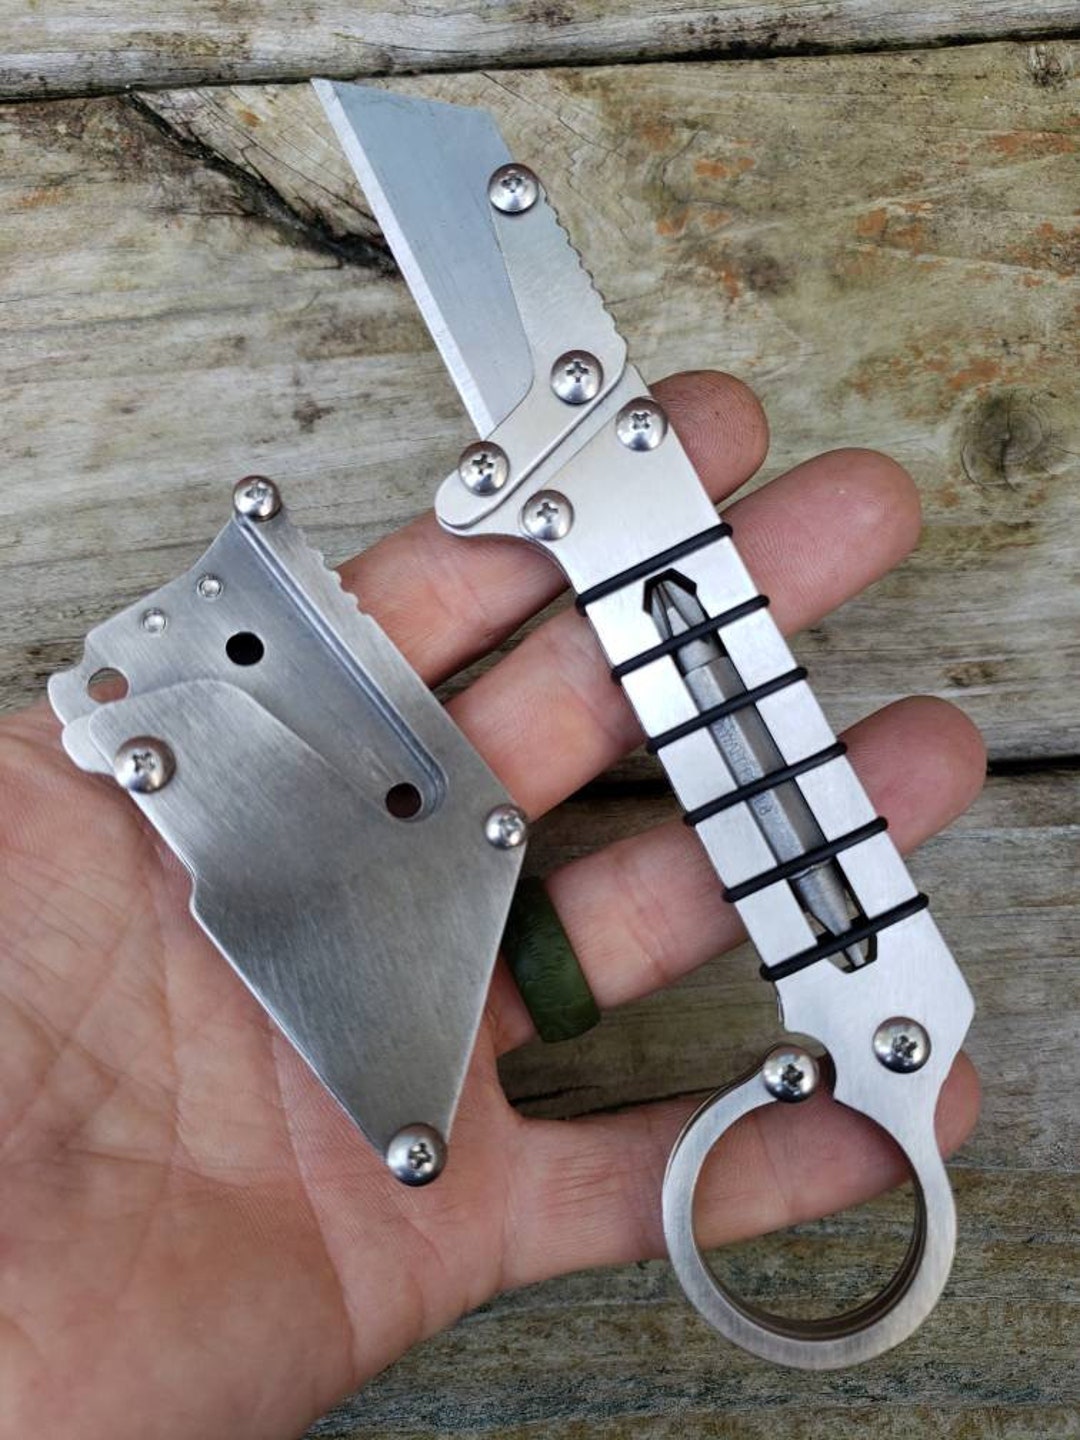 Tajima Slim Handle Box Cutter Knife with Slide Lock 3 Blades